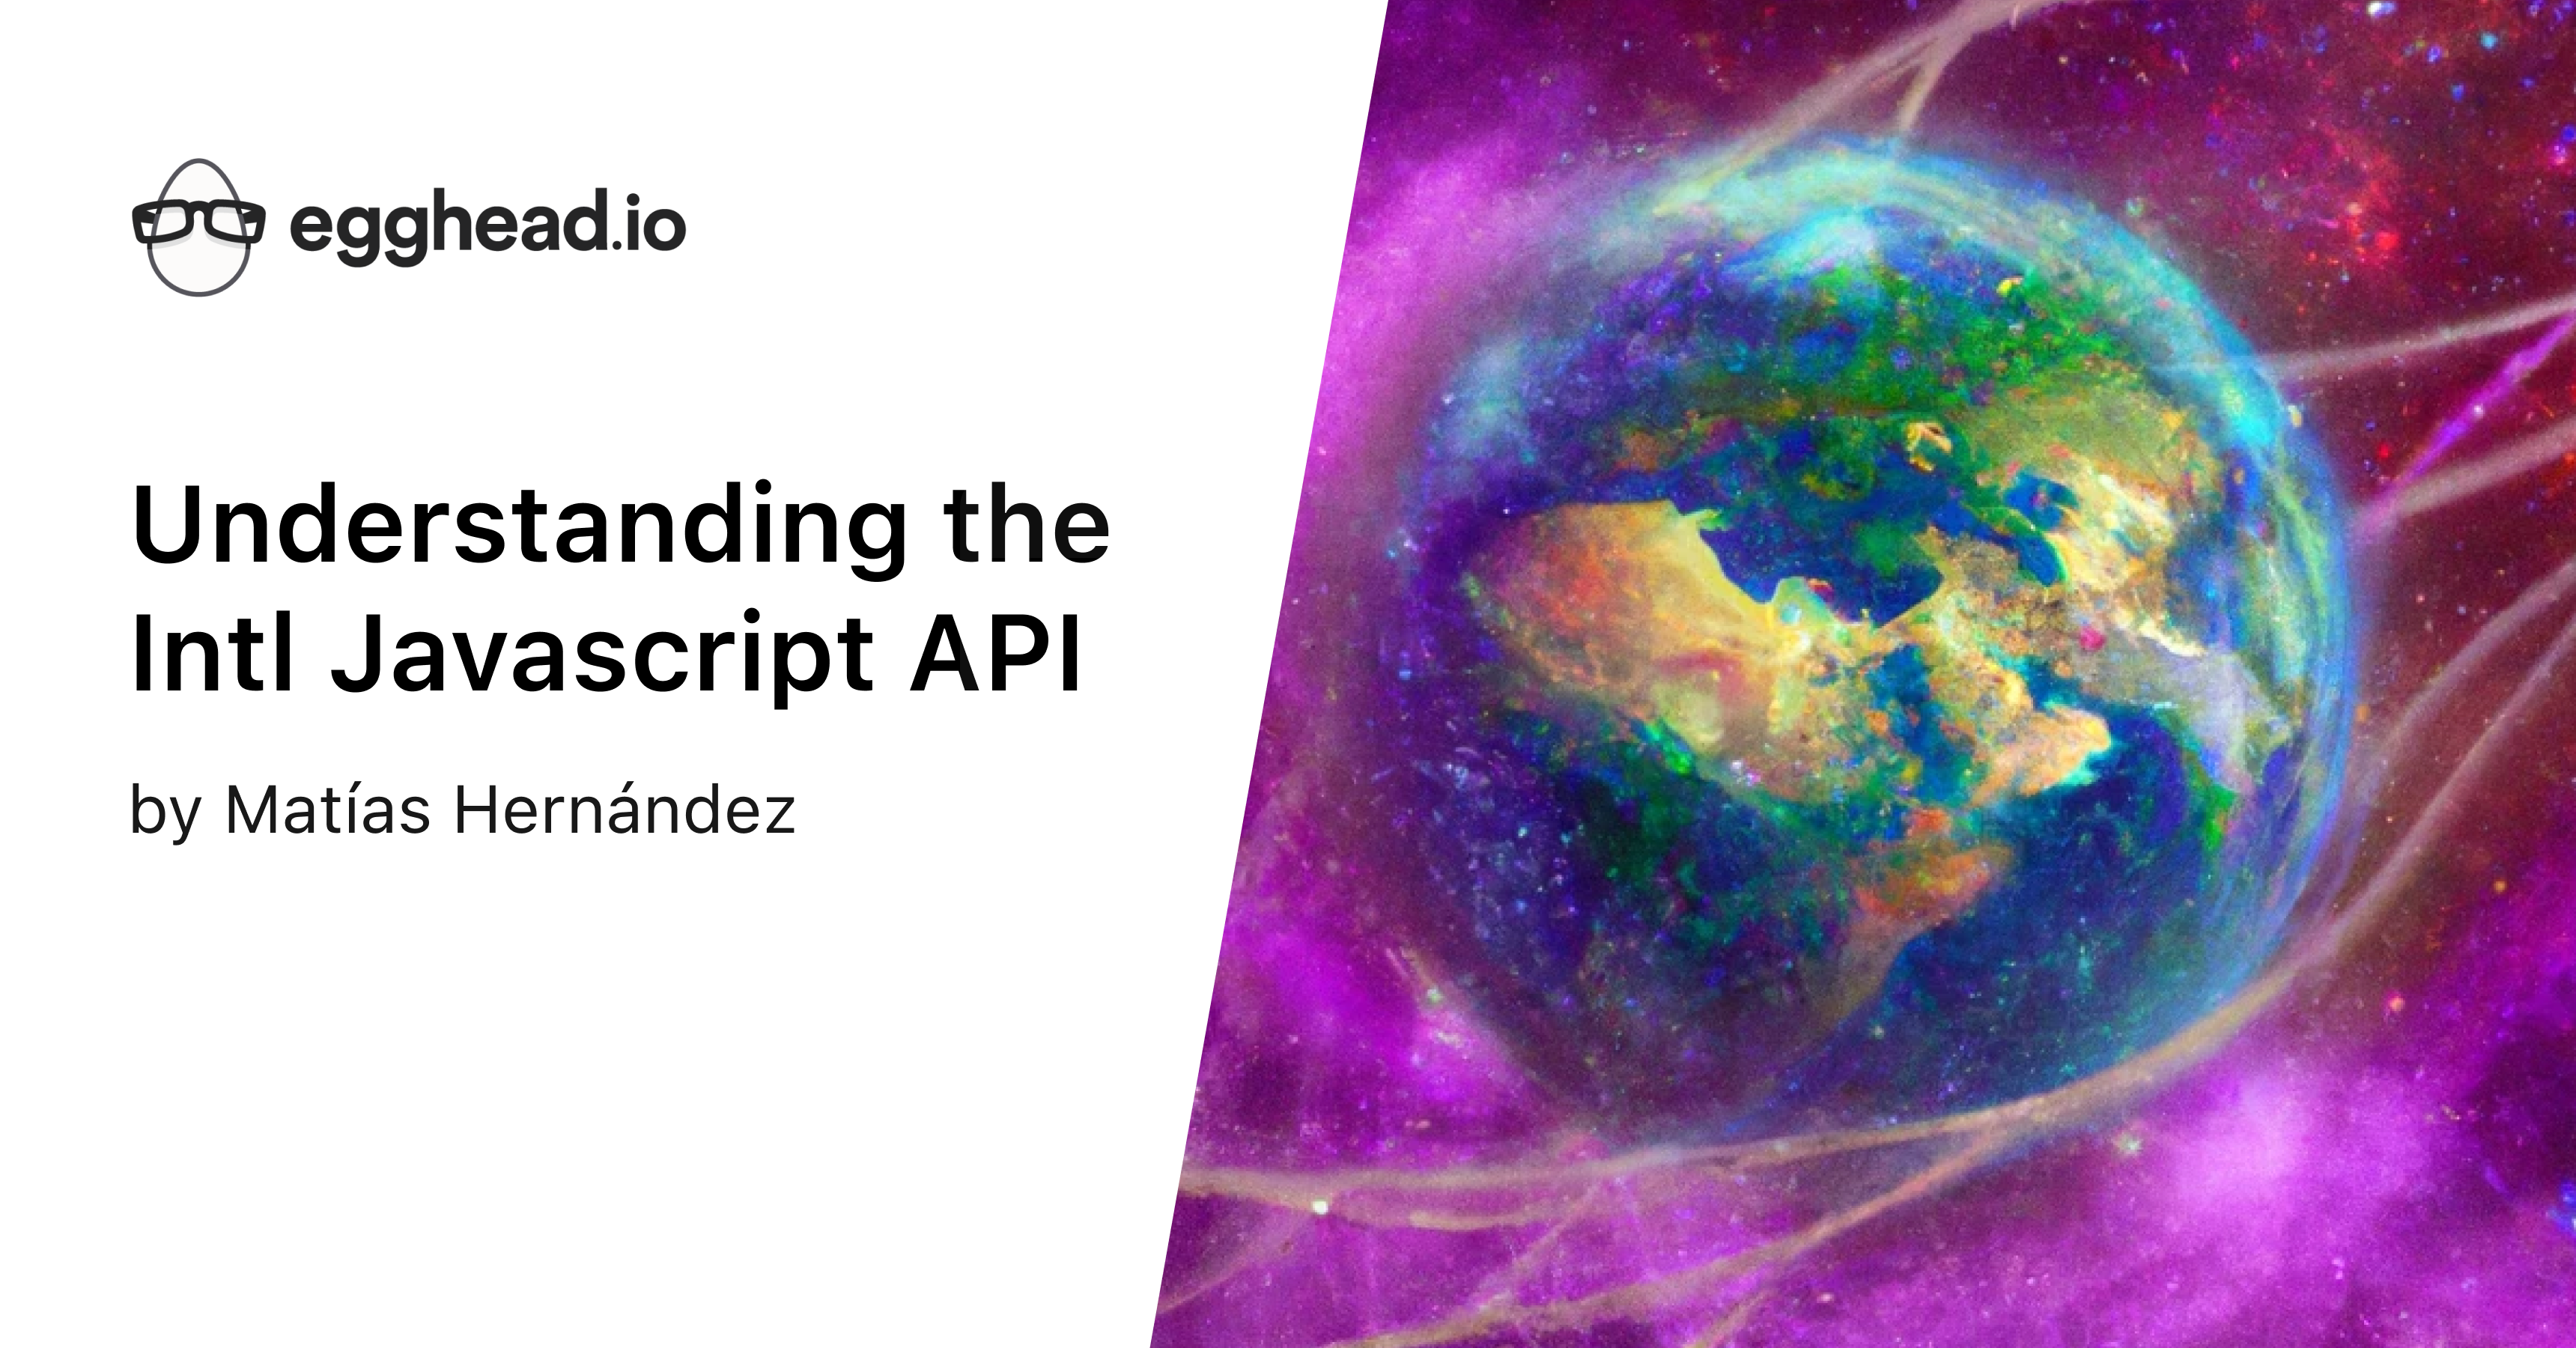 Understanding the Intl Javascript API